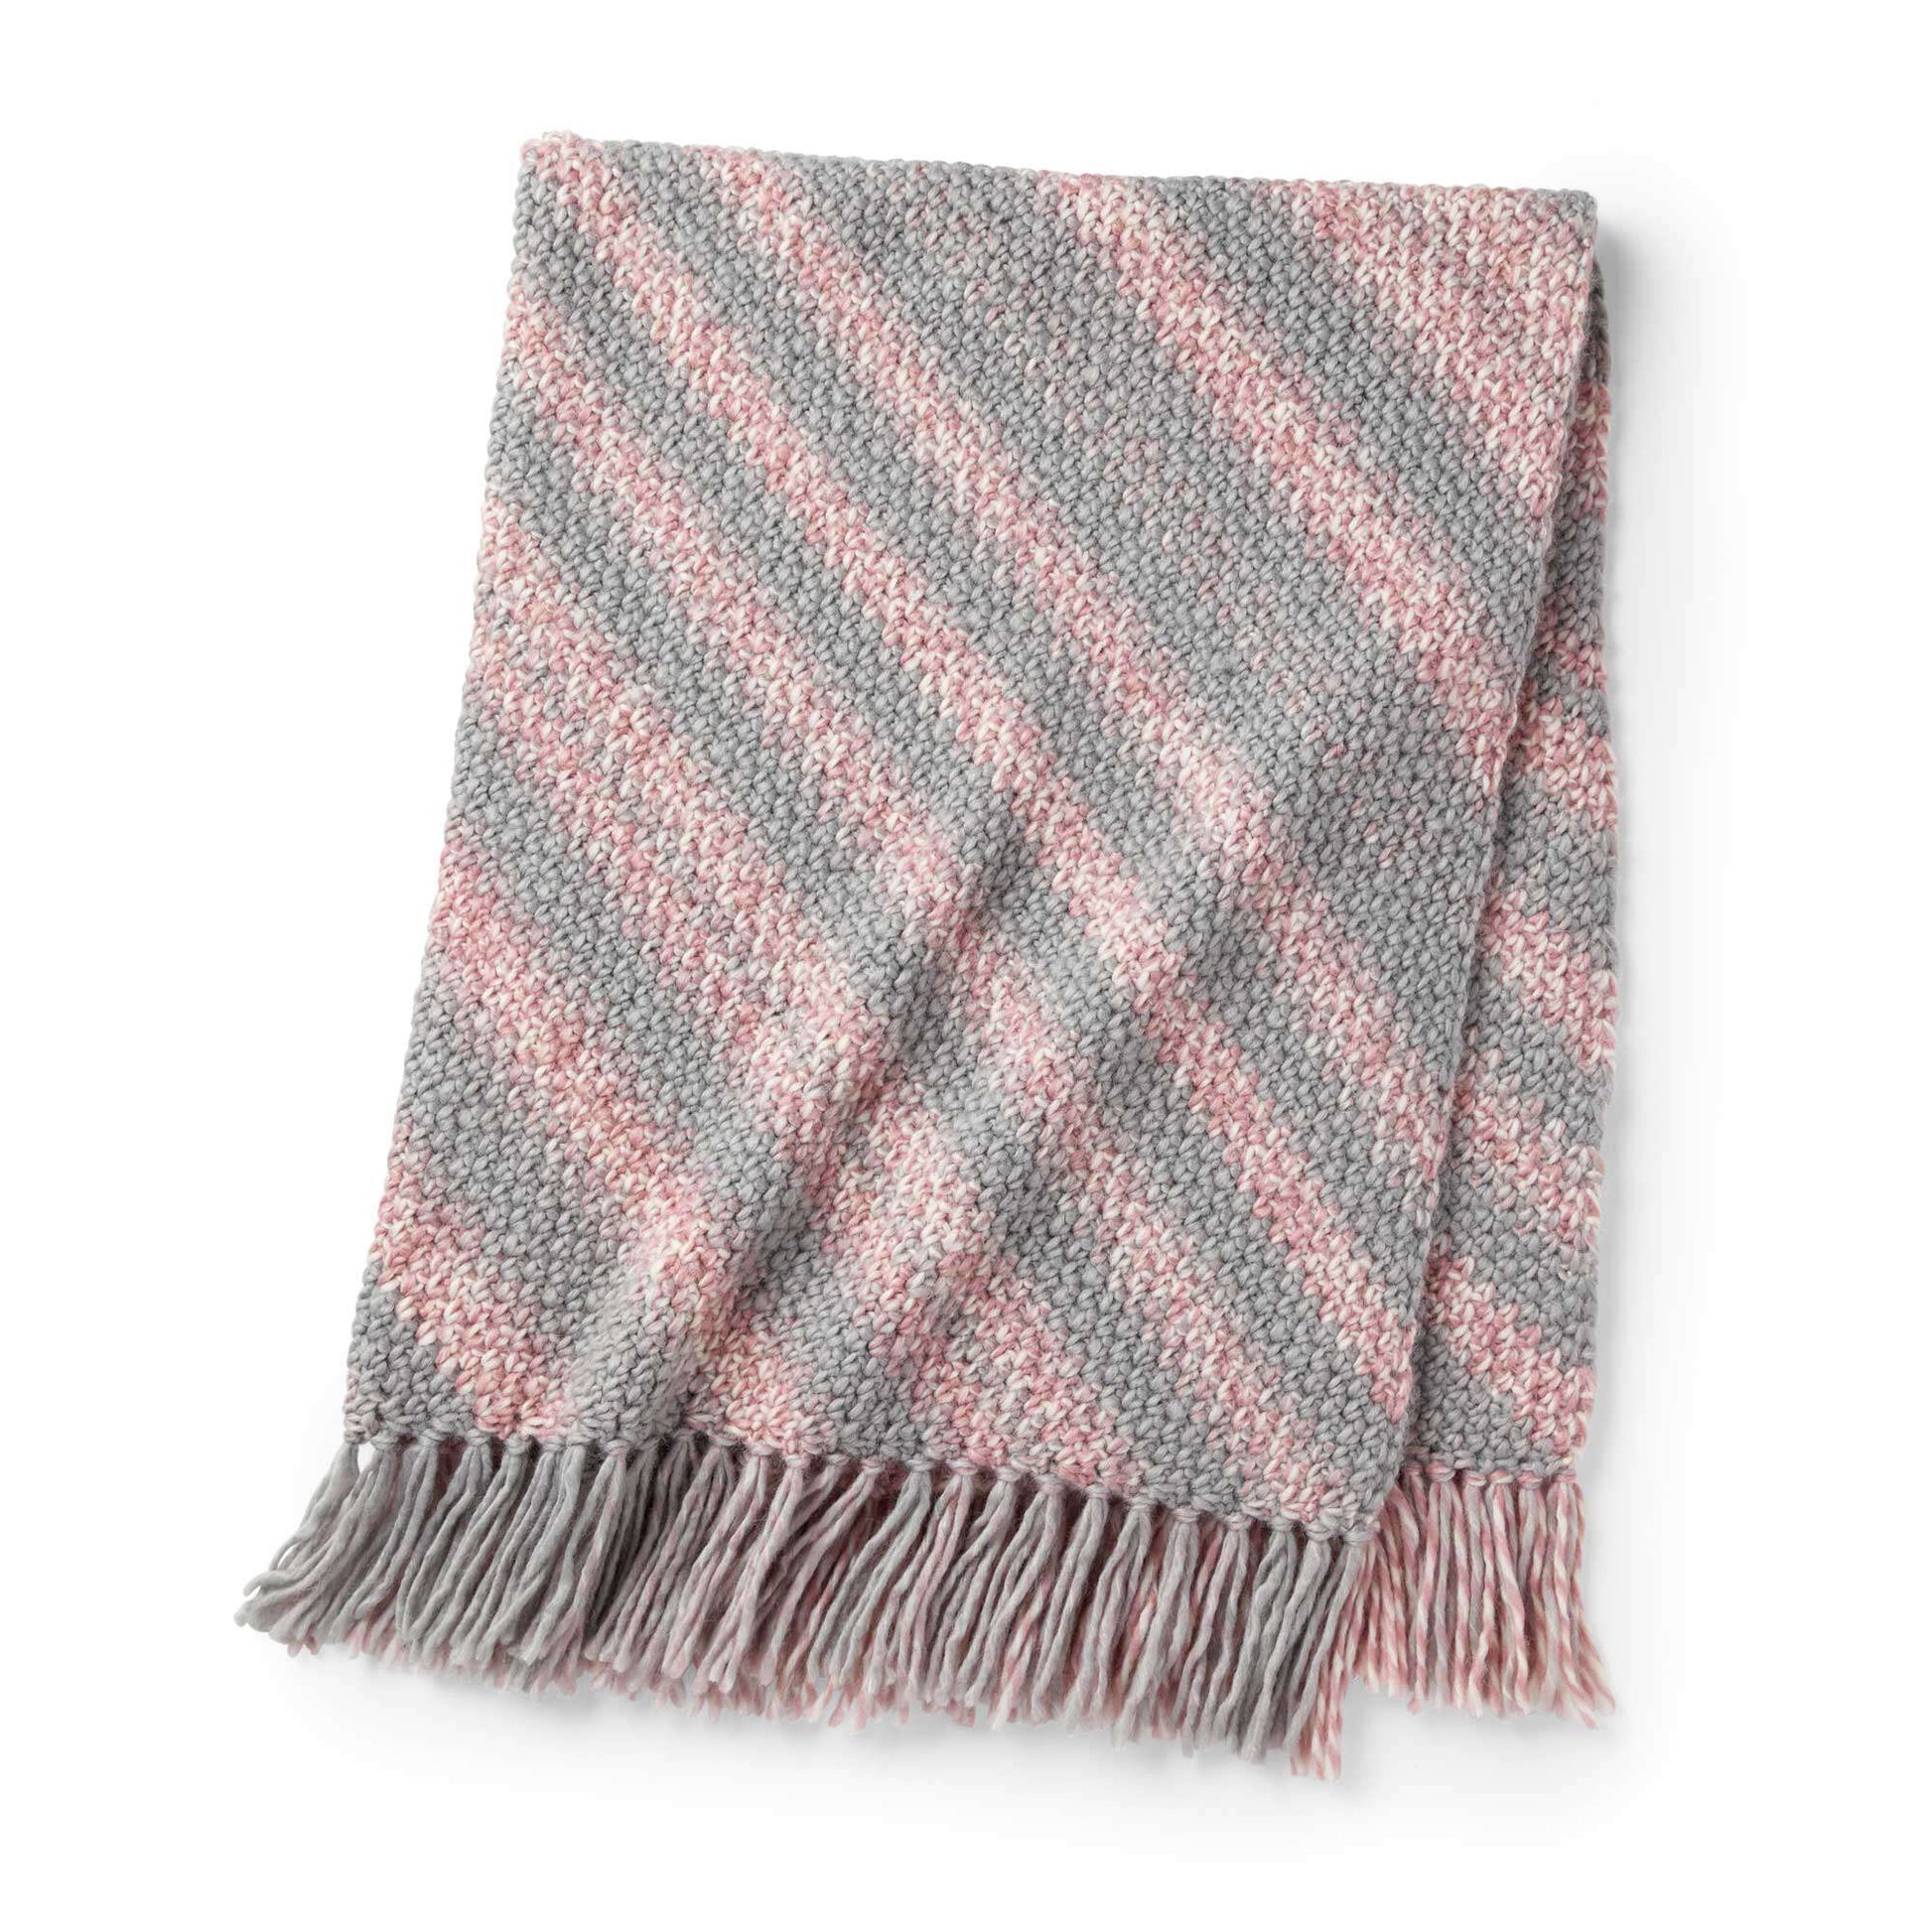 Free Caron Bias Striped Swirl Crochet Blanket Pattern